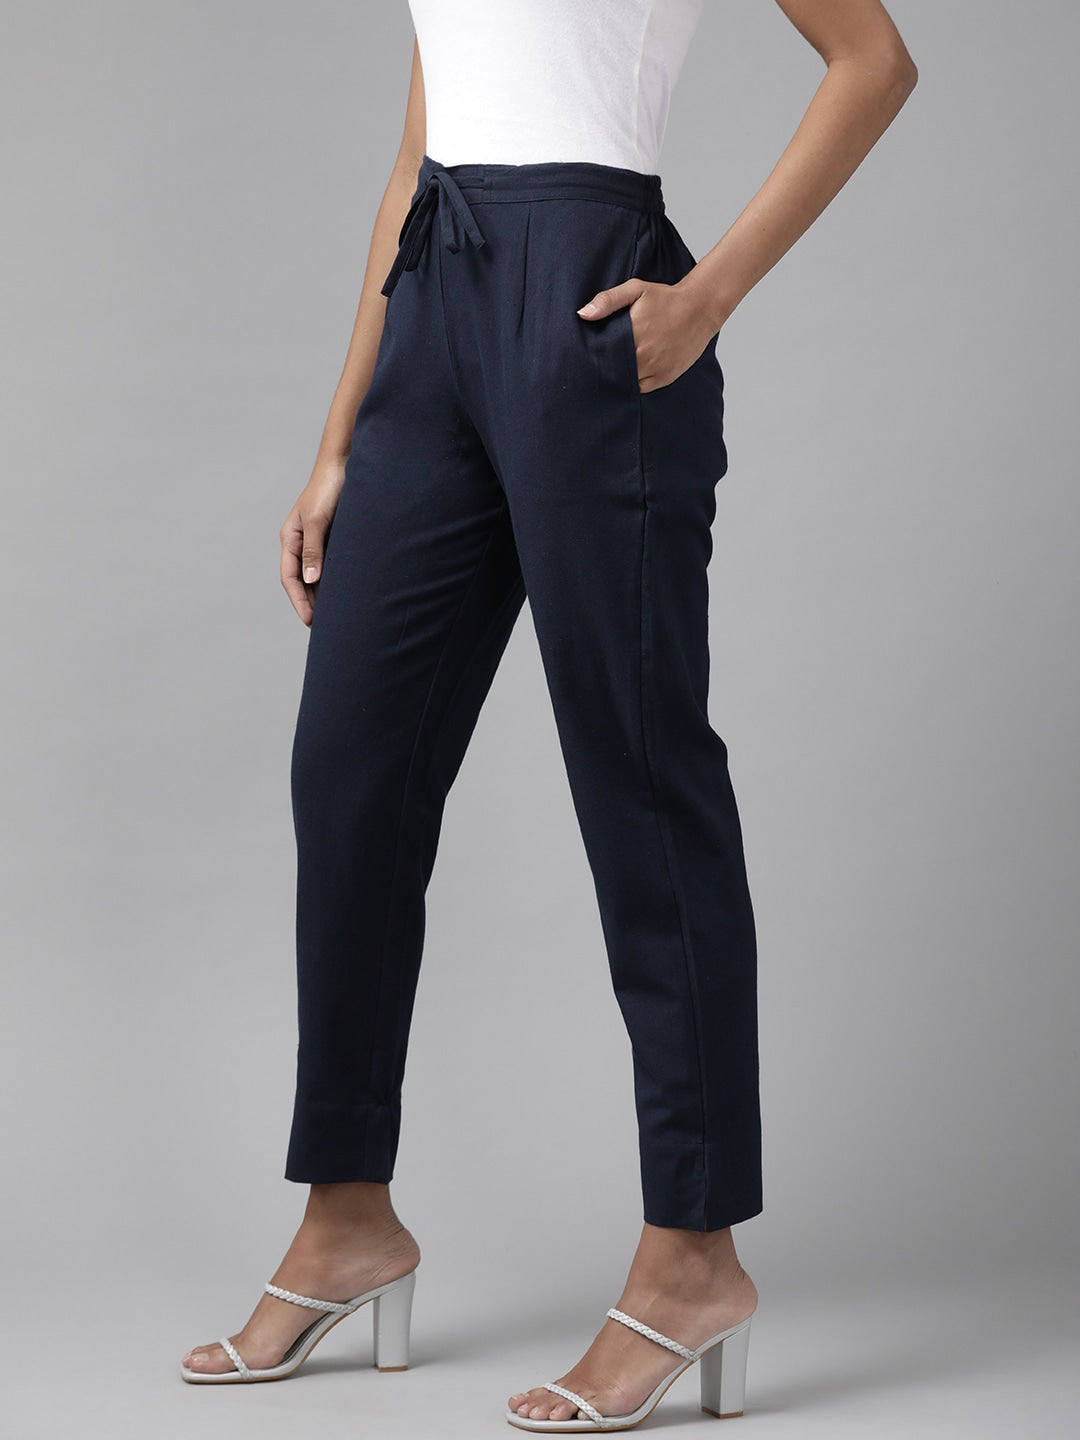 Navy Blue Cotton Fit Trousers-Yufta Store-4206PNTNBS